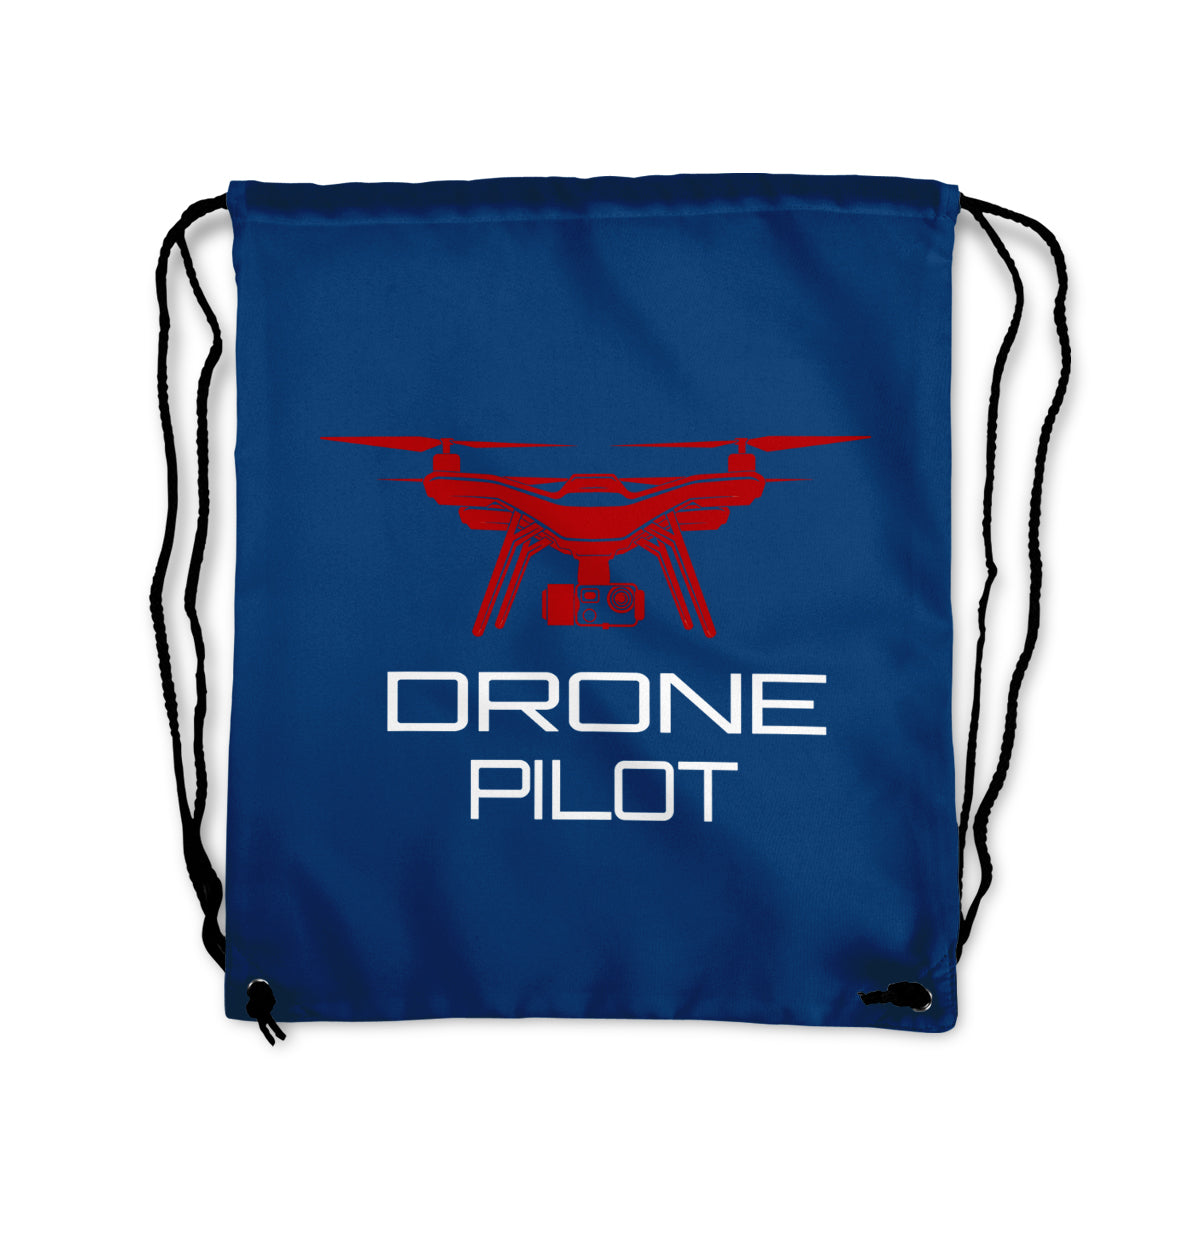 Drone Pilot Designed Drawstring Bags